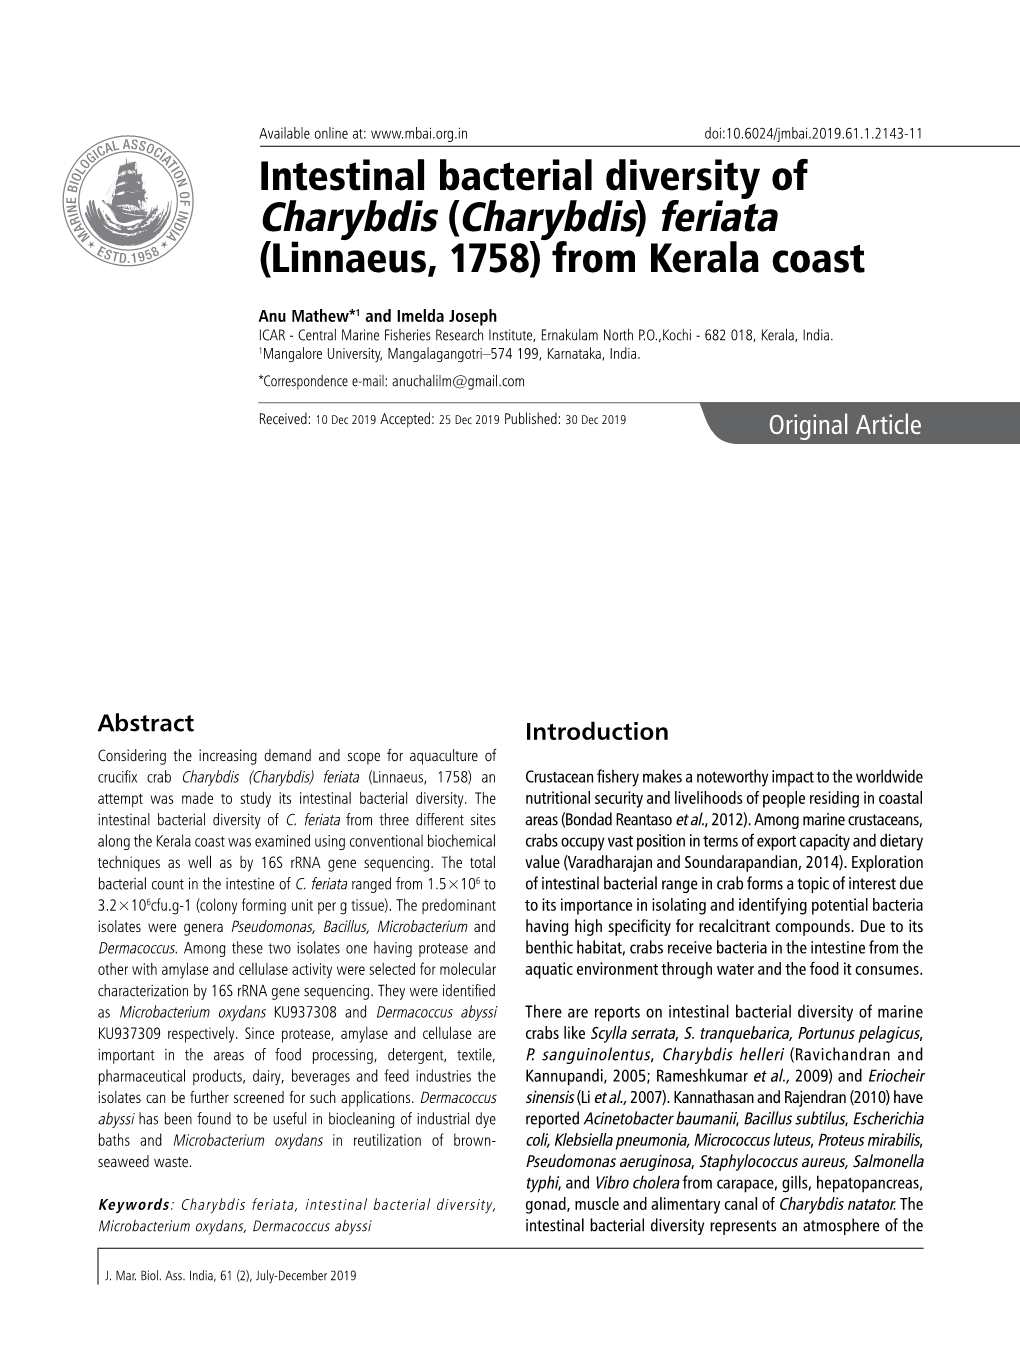 Intestinal Bacterial Diversity of Charybdis (Charybdis) Feriata (Linnaeus, 1758) from Kerala Coast